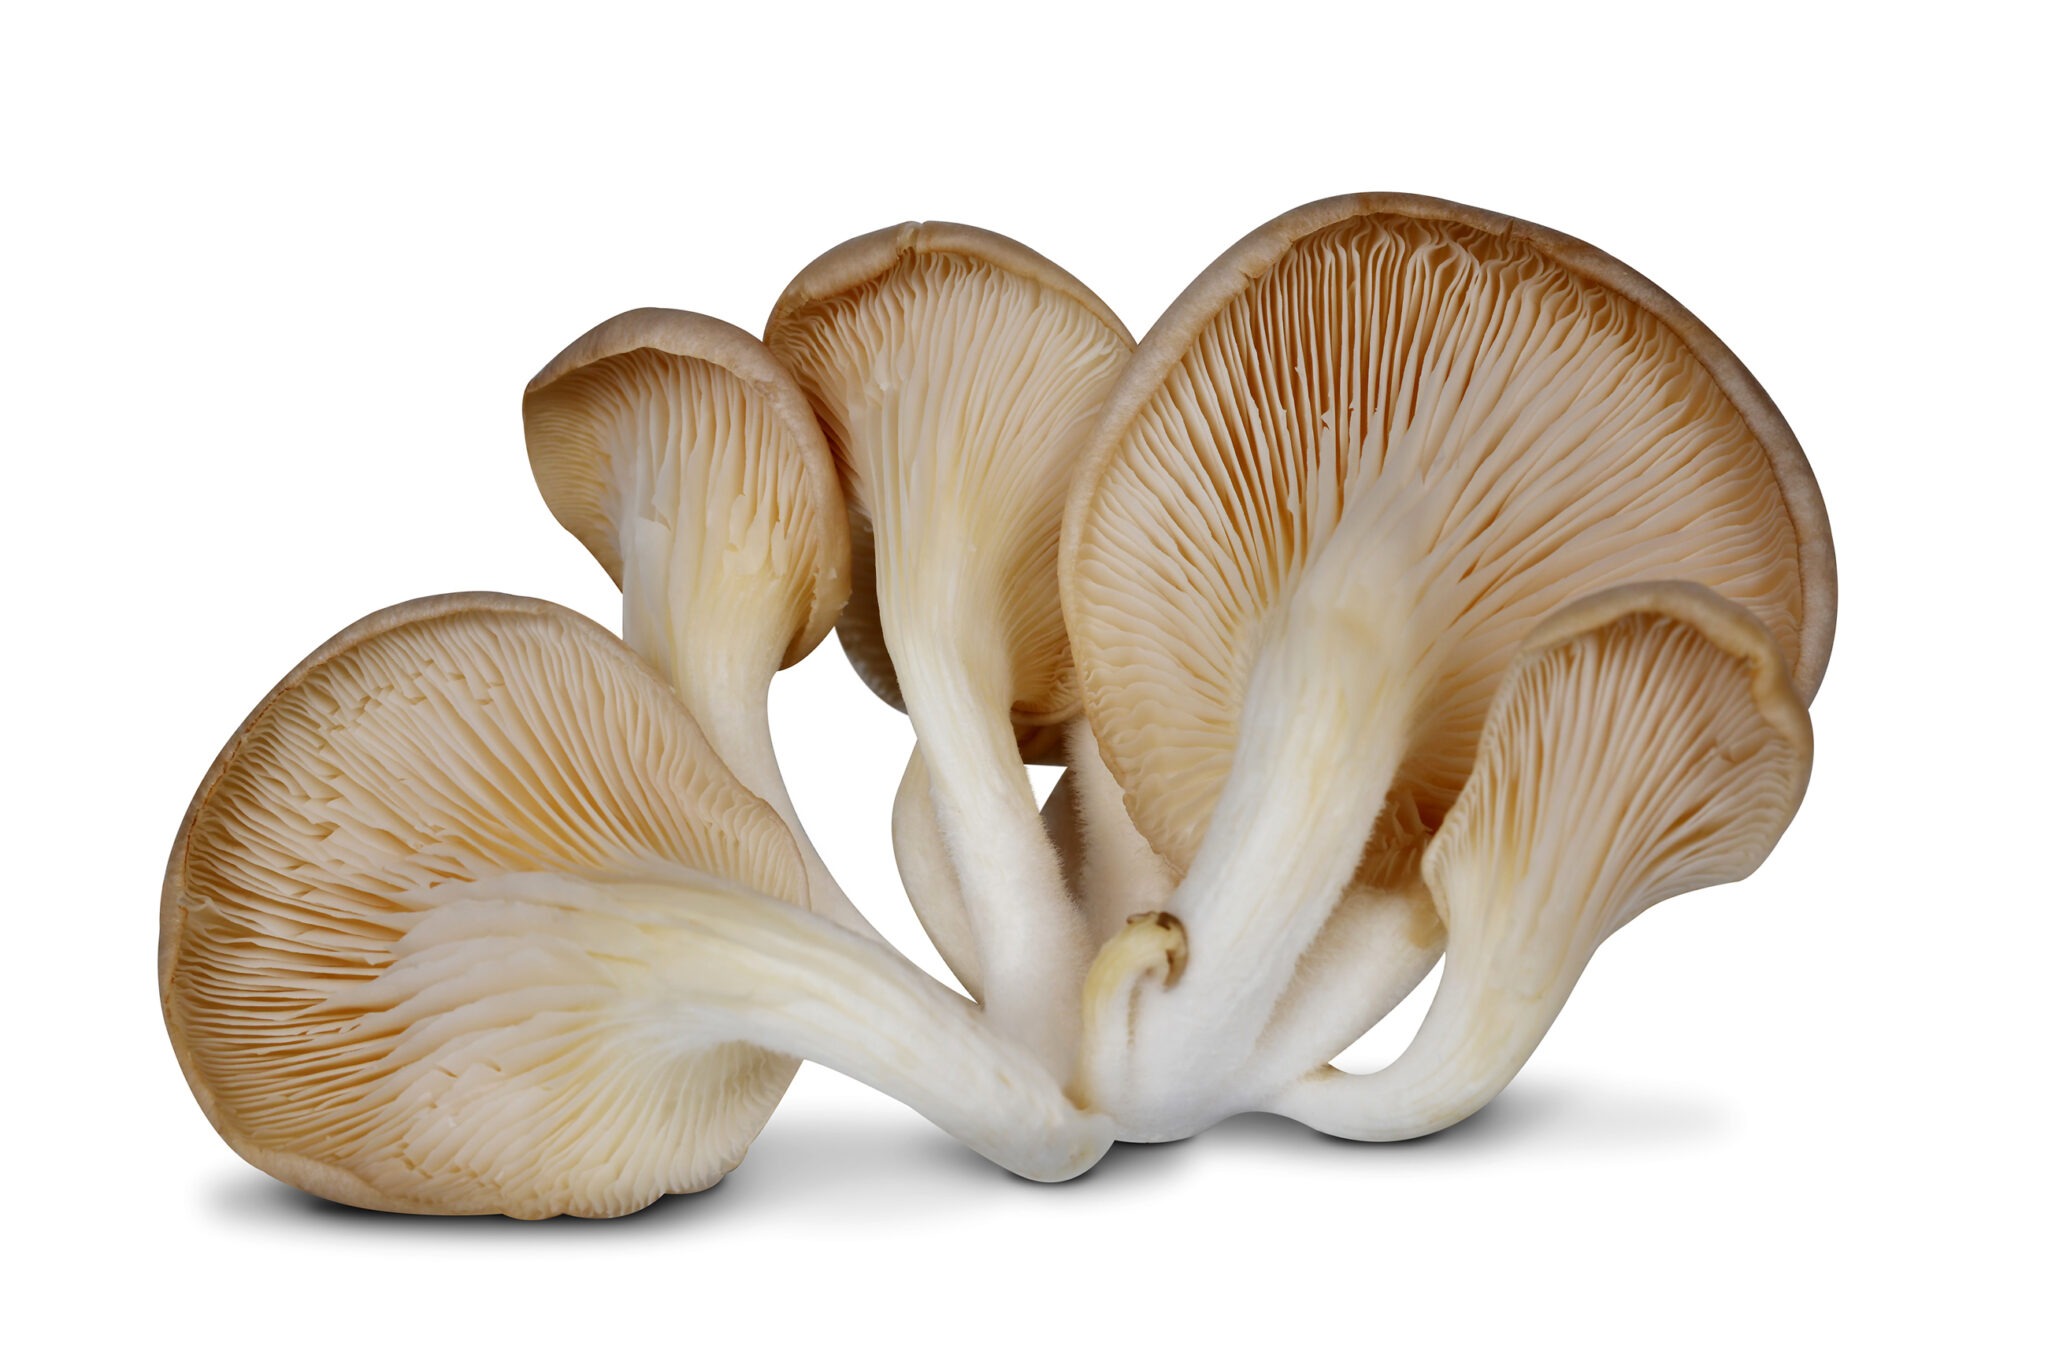 6 Impressive Benefits of Oyster Mushrooms